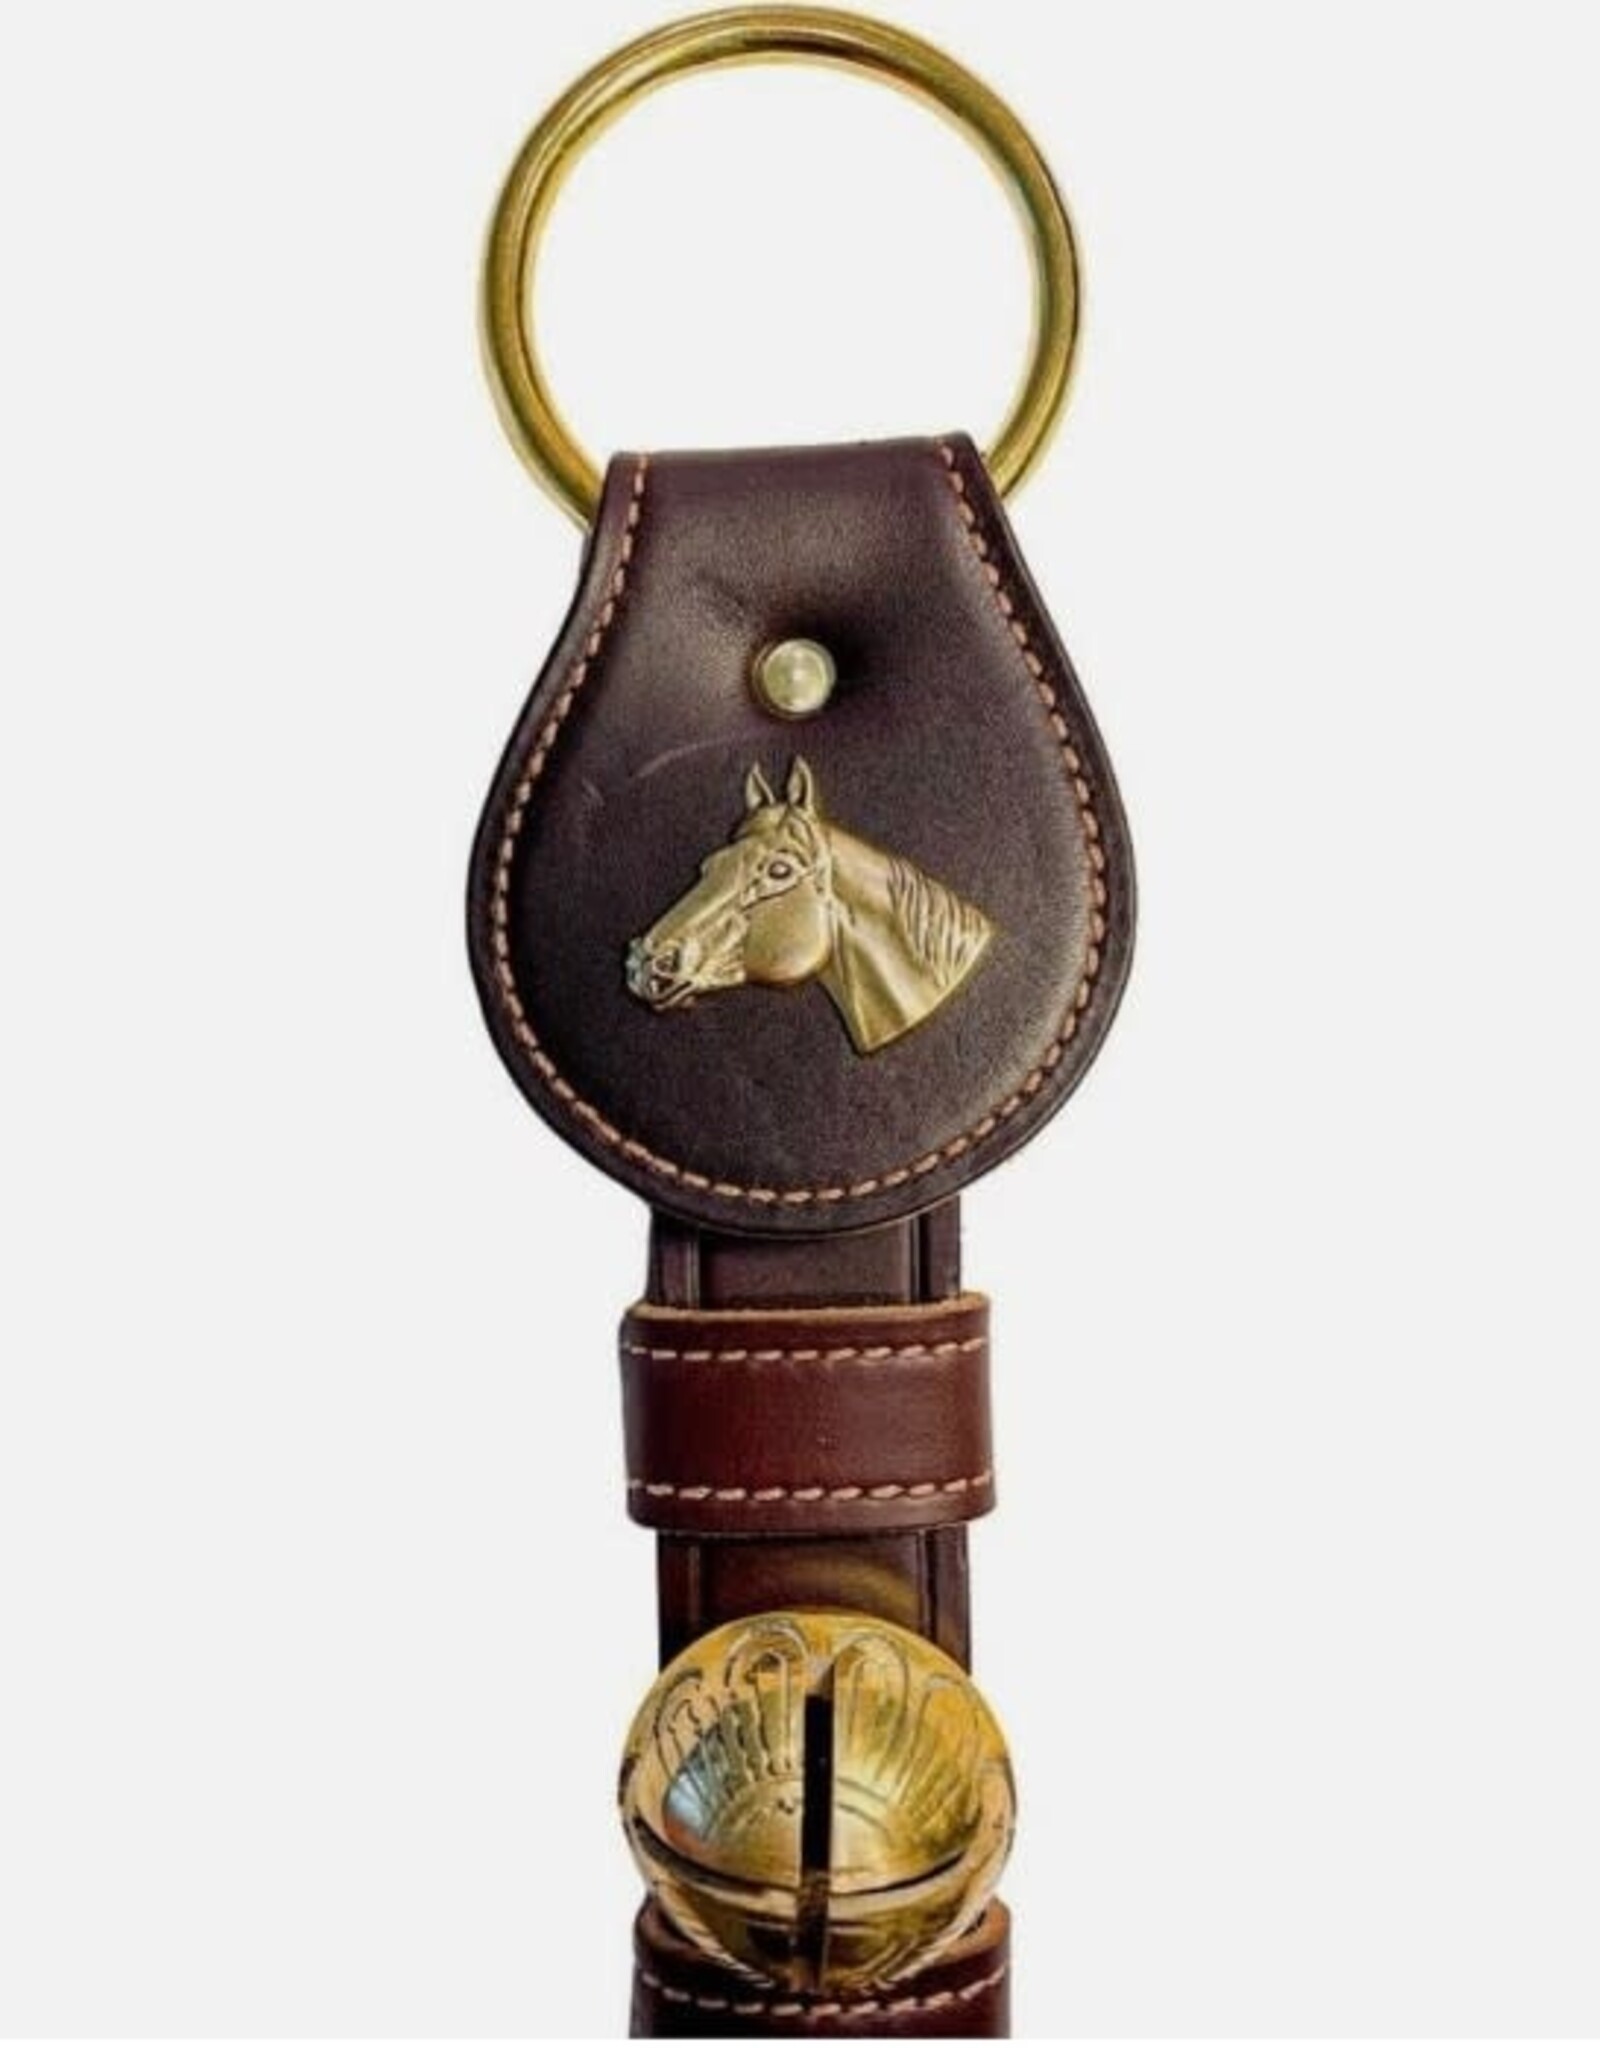 Belsnickel Bells HORSEHEAD CHARM, 3 Solid Brass Belsnickel Bells on Strap, Lg Ring Top - Chestnut